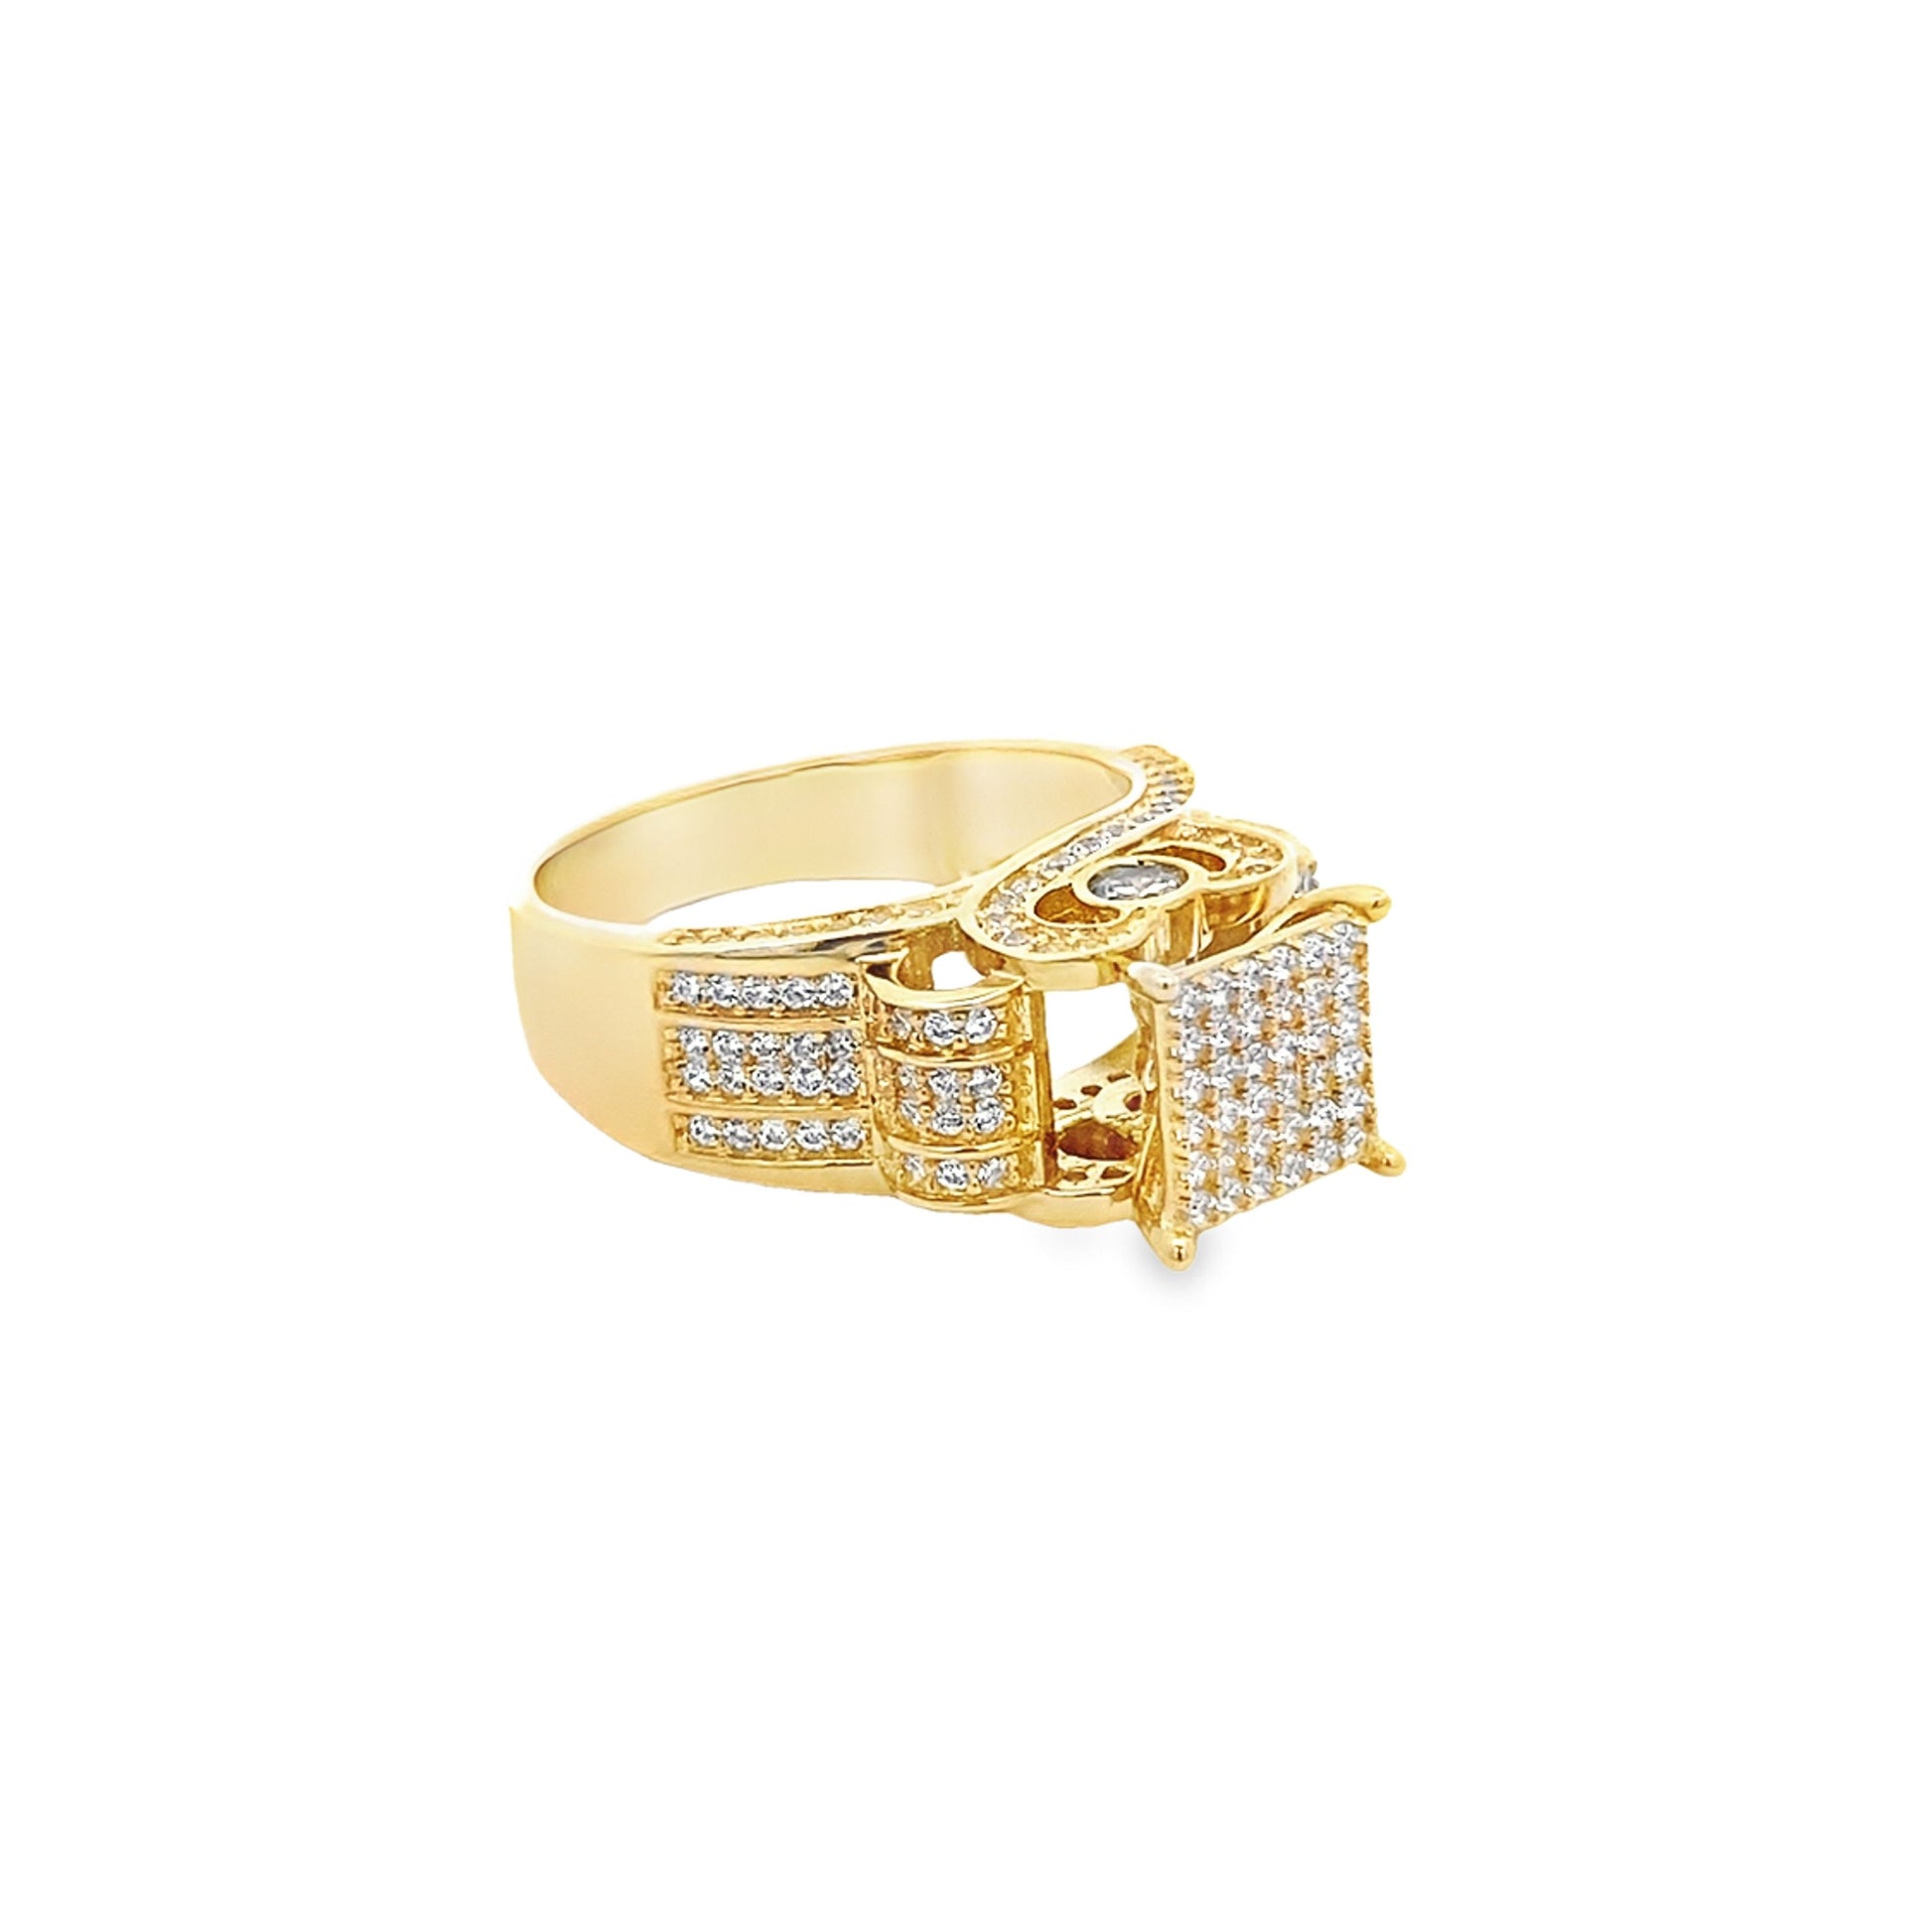 10K Yellow Gold Cz Lds Fashion Ring Size 8 4.0Dwt